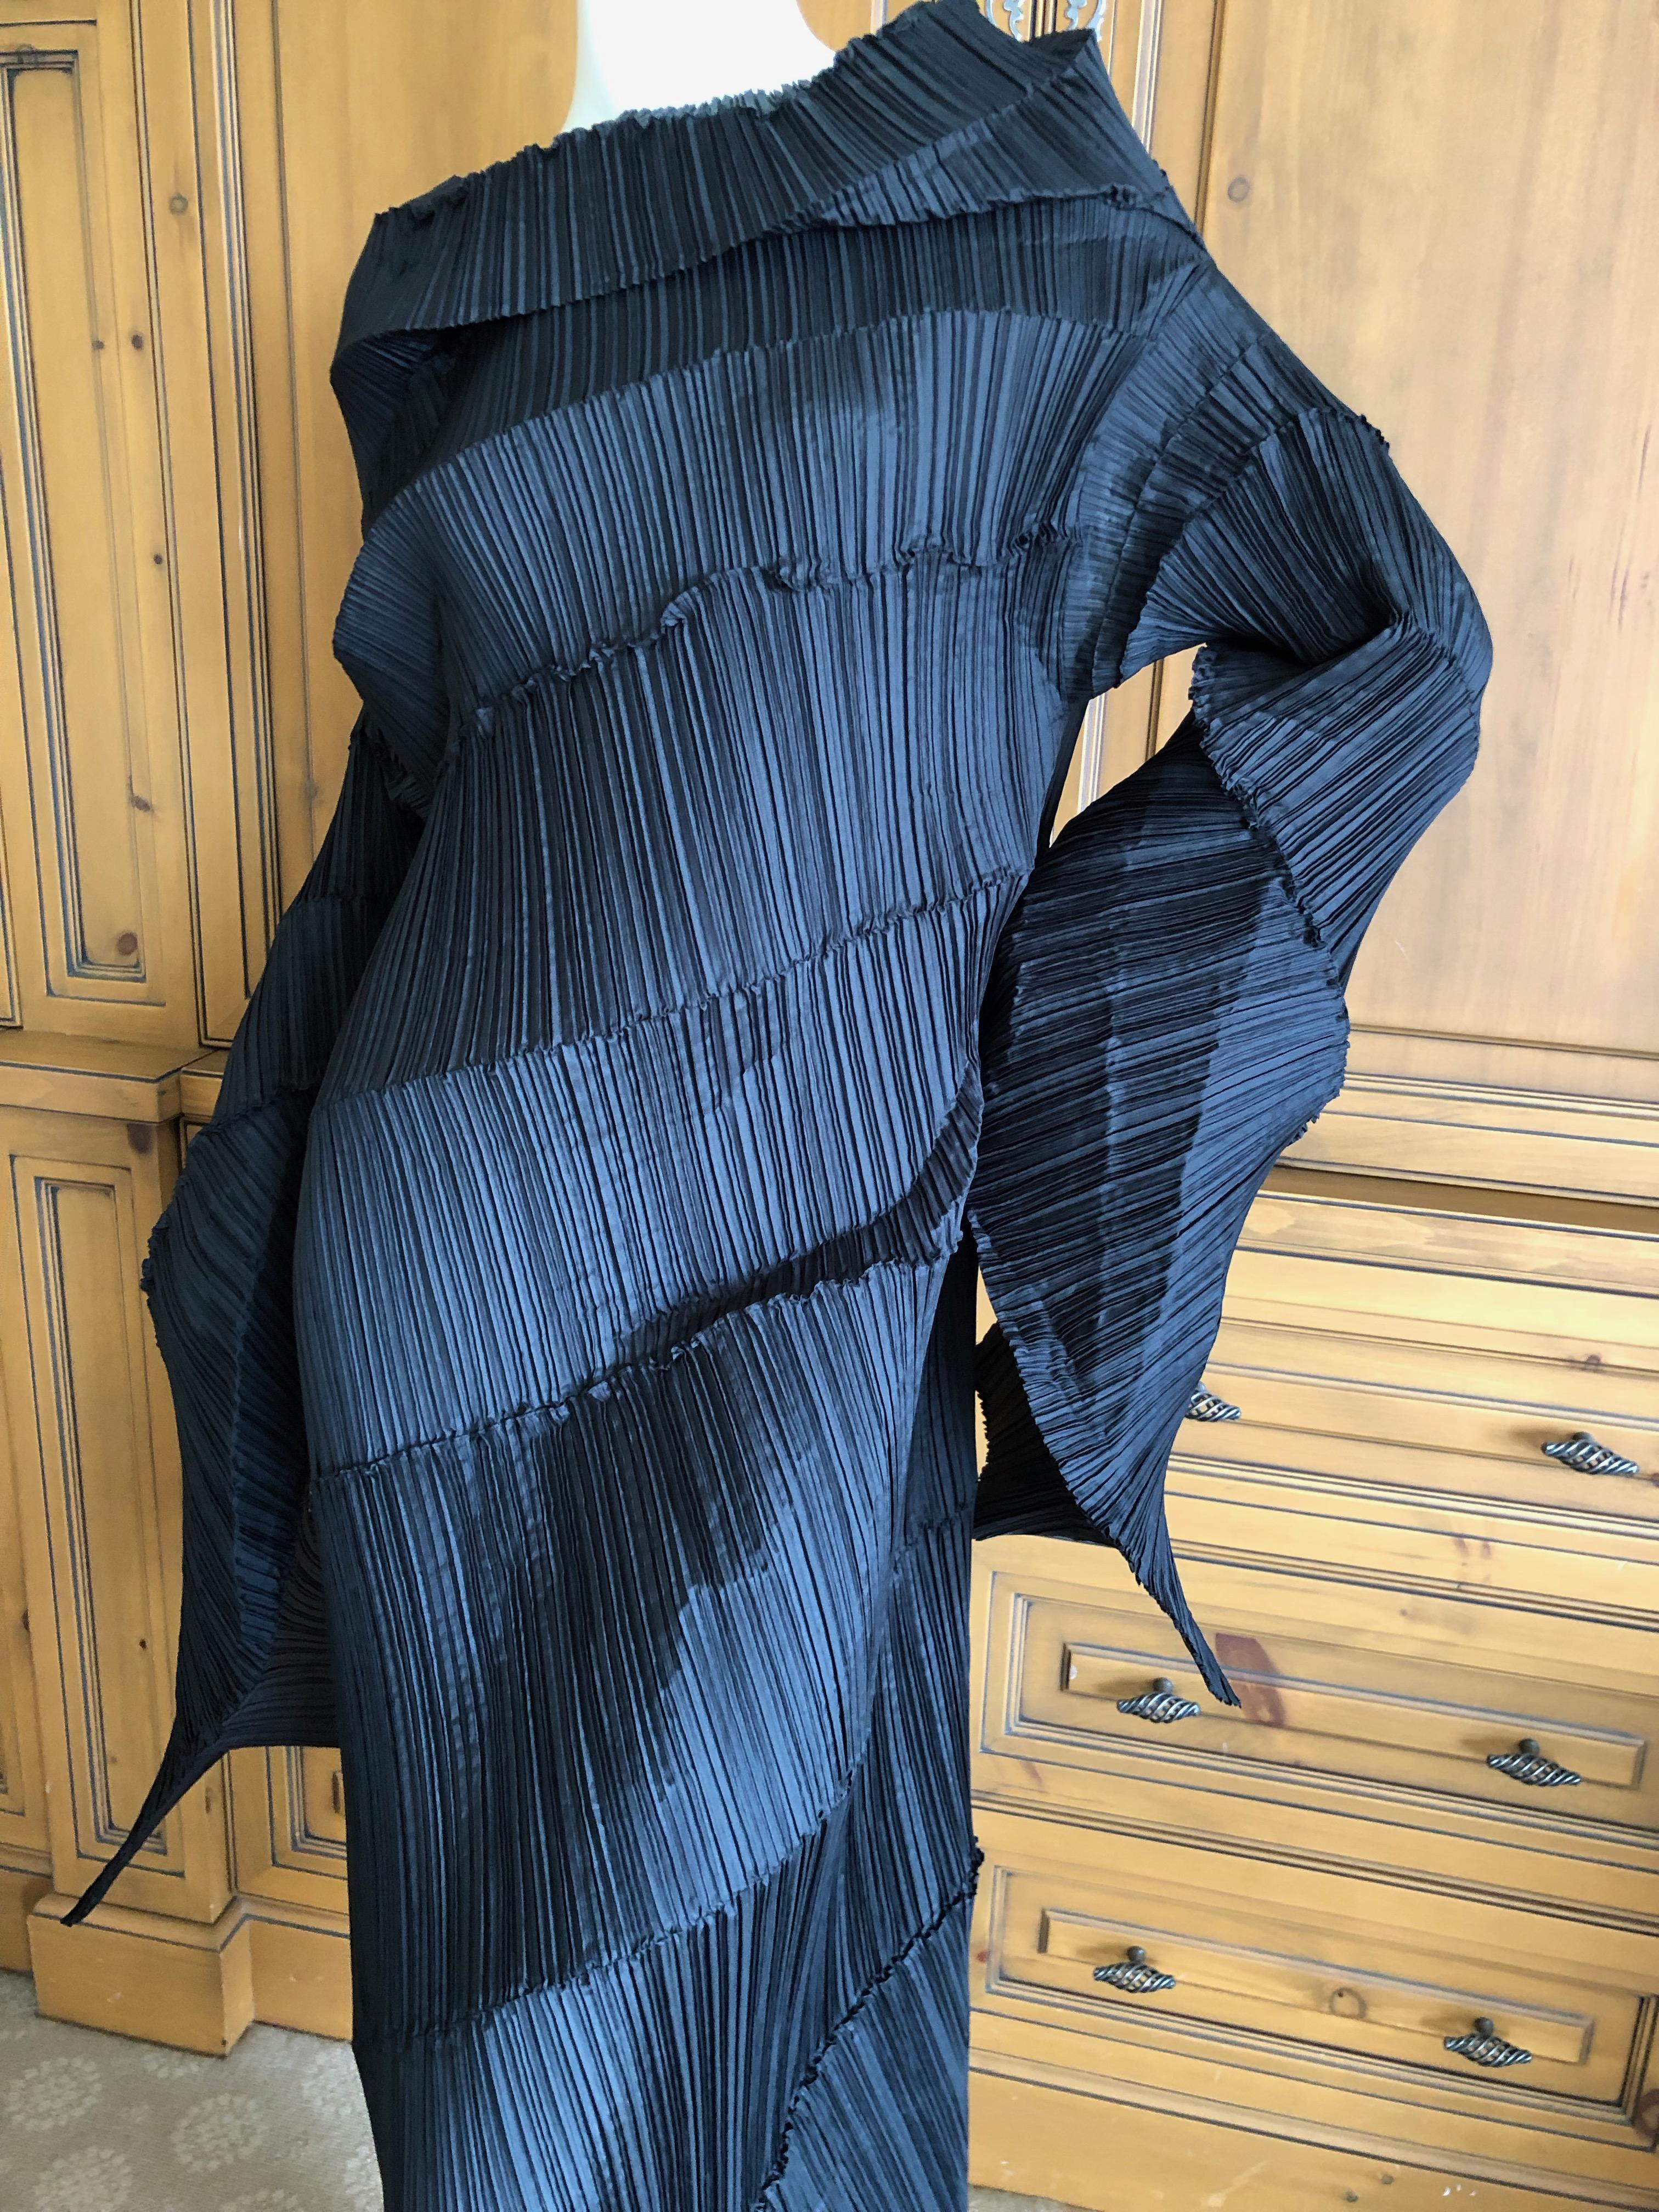 Issey Miyake Spiraling Sculptural Black Pleated Vintage Dress 2